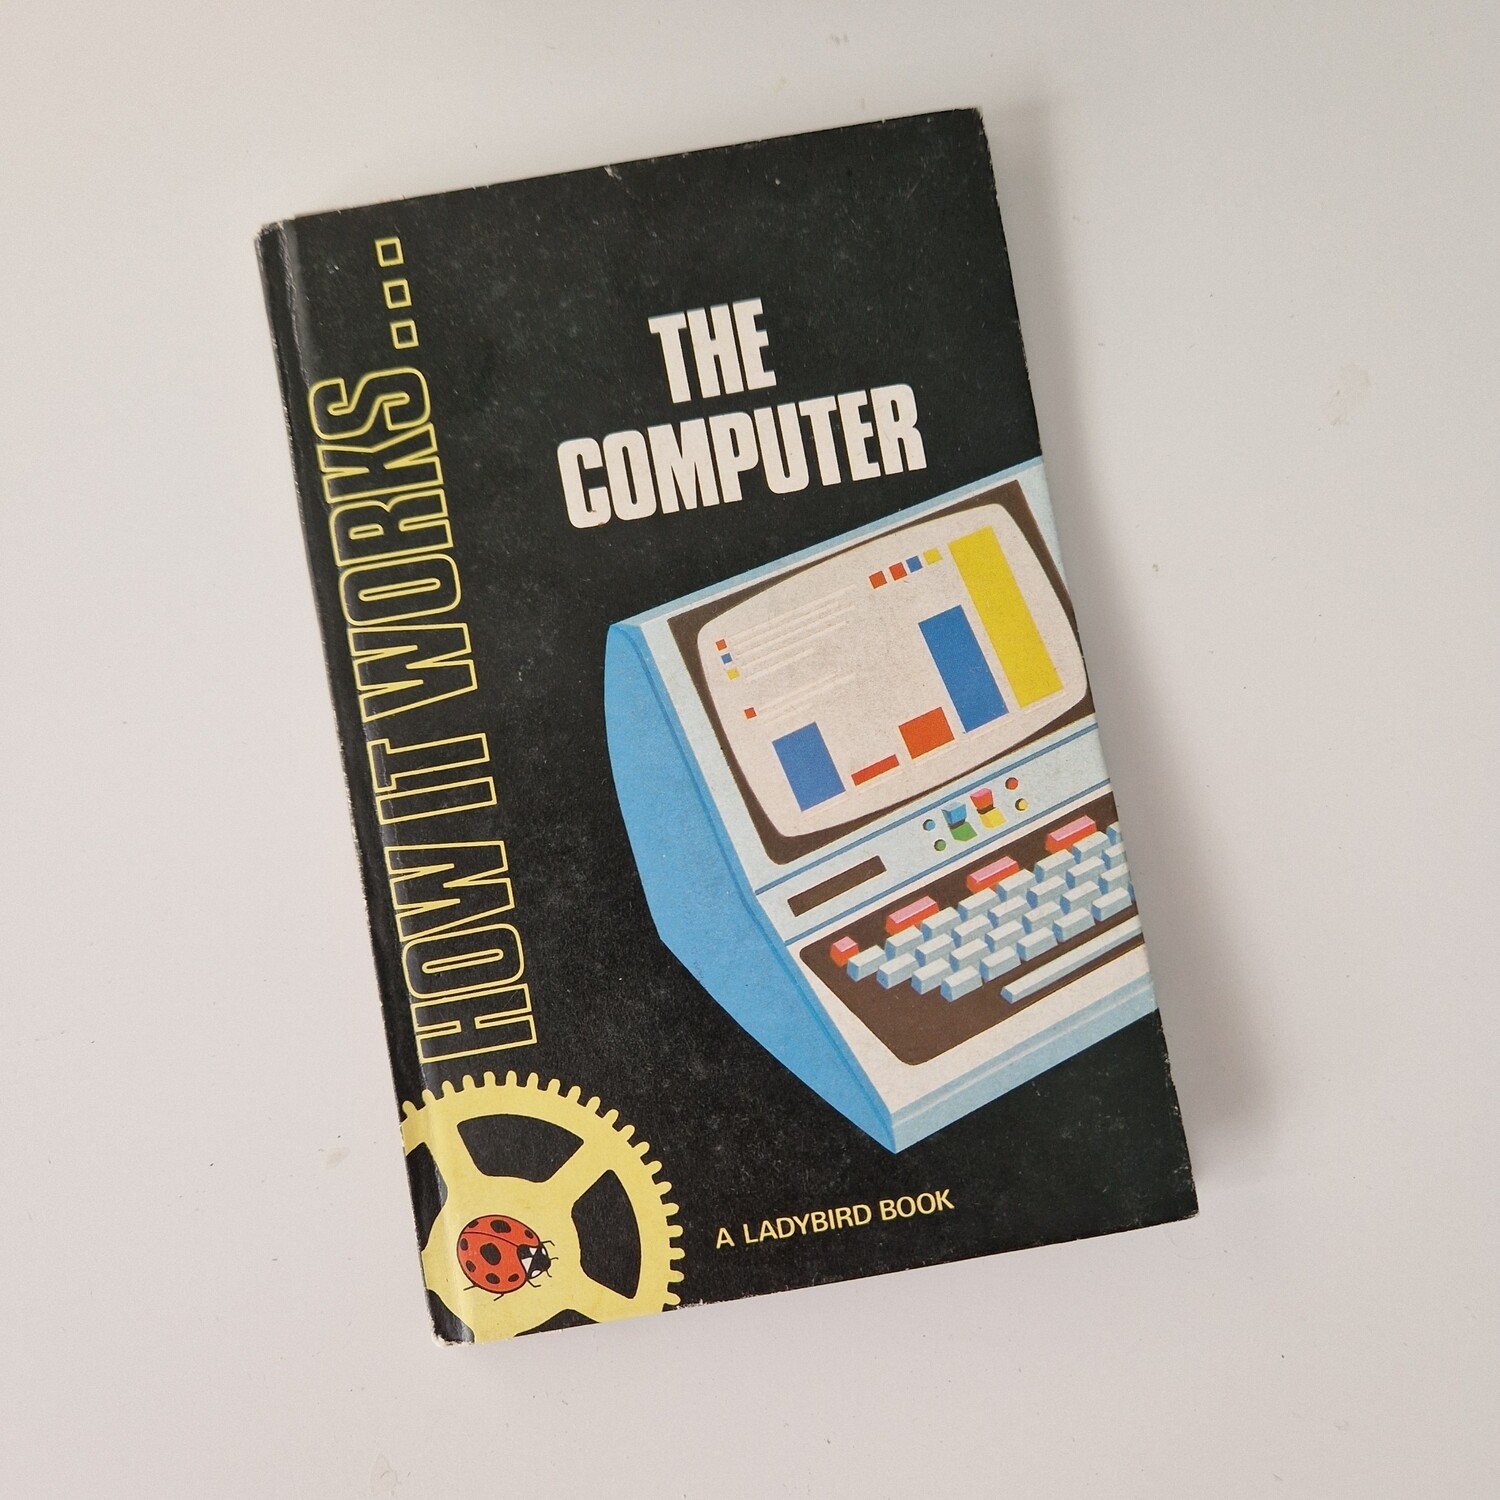 The Computer - ladybird book